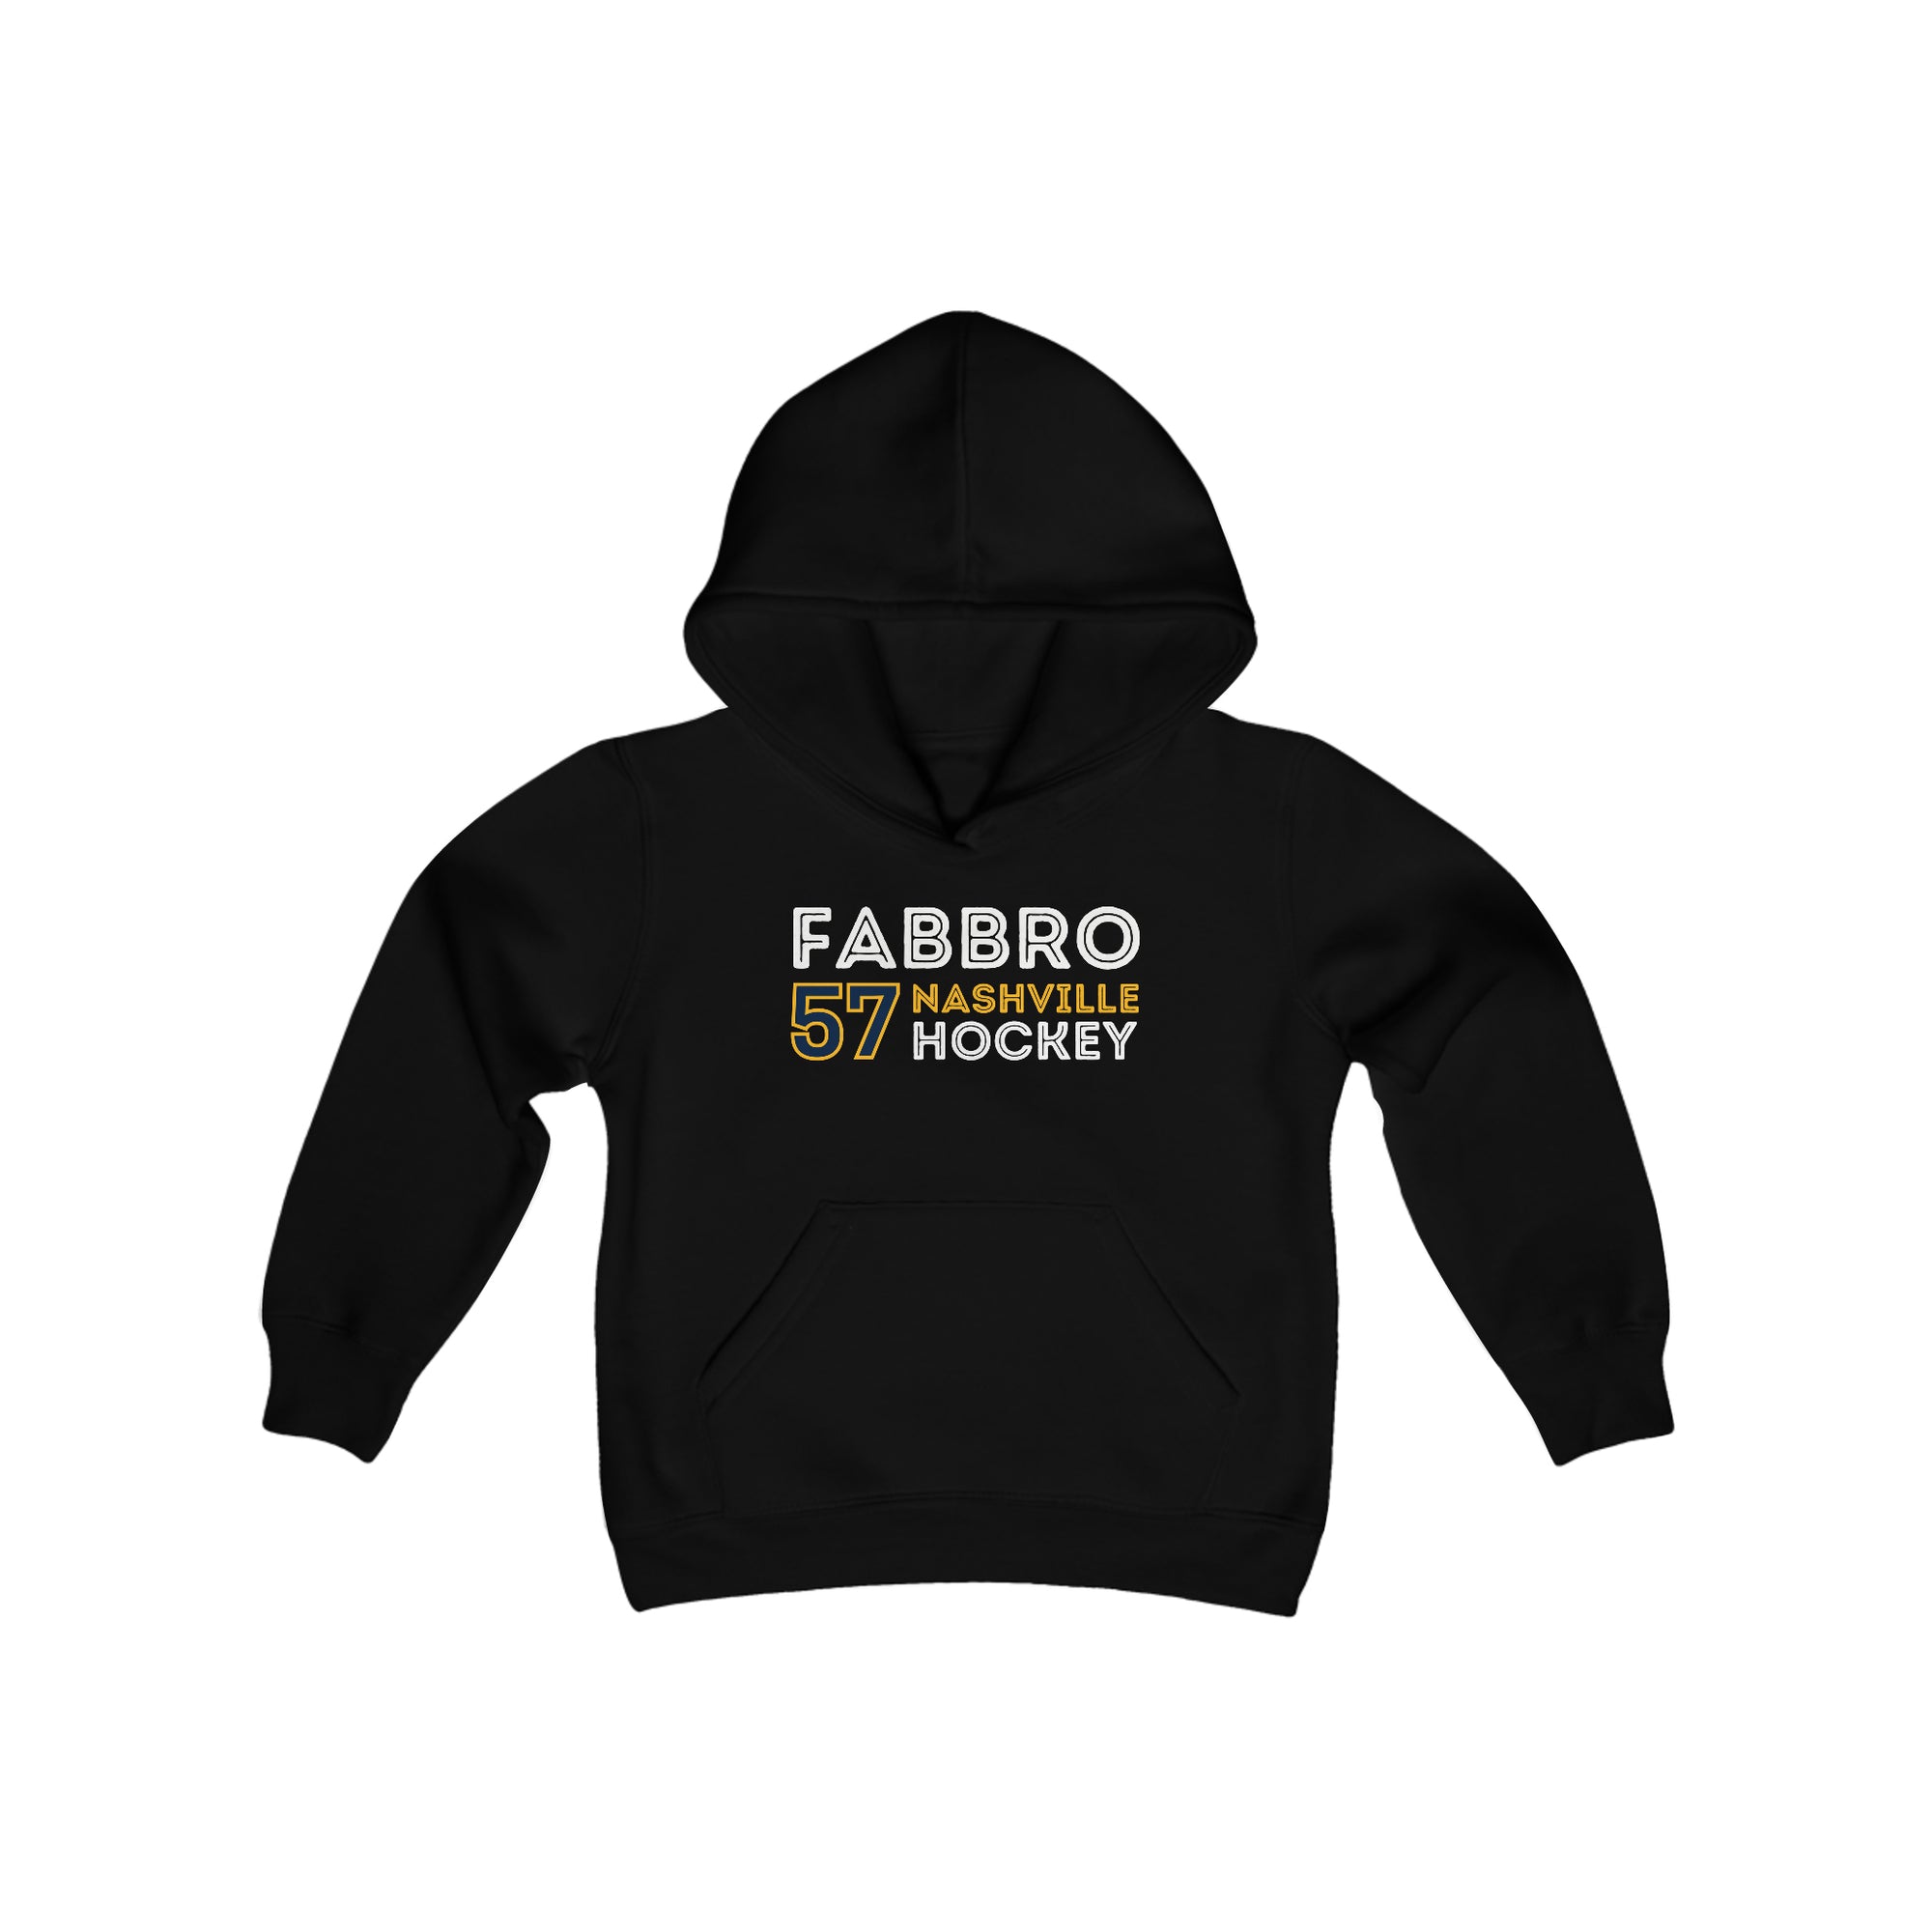 Fabbro 57 Nashville Hockey Grafitti Wall Design Youth Hooded Sweatshirt